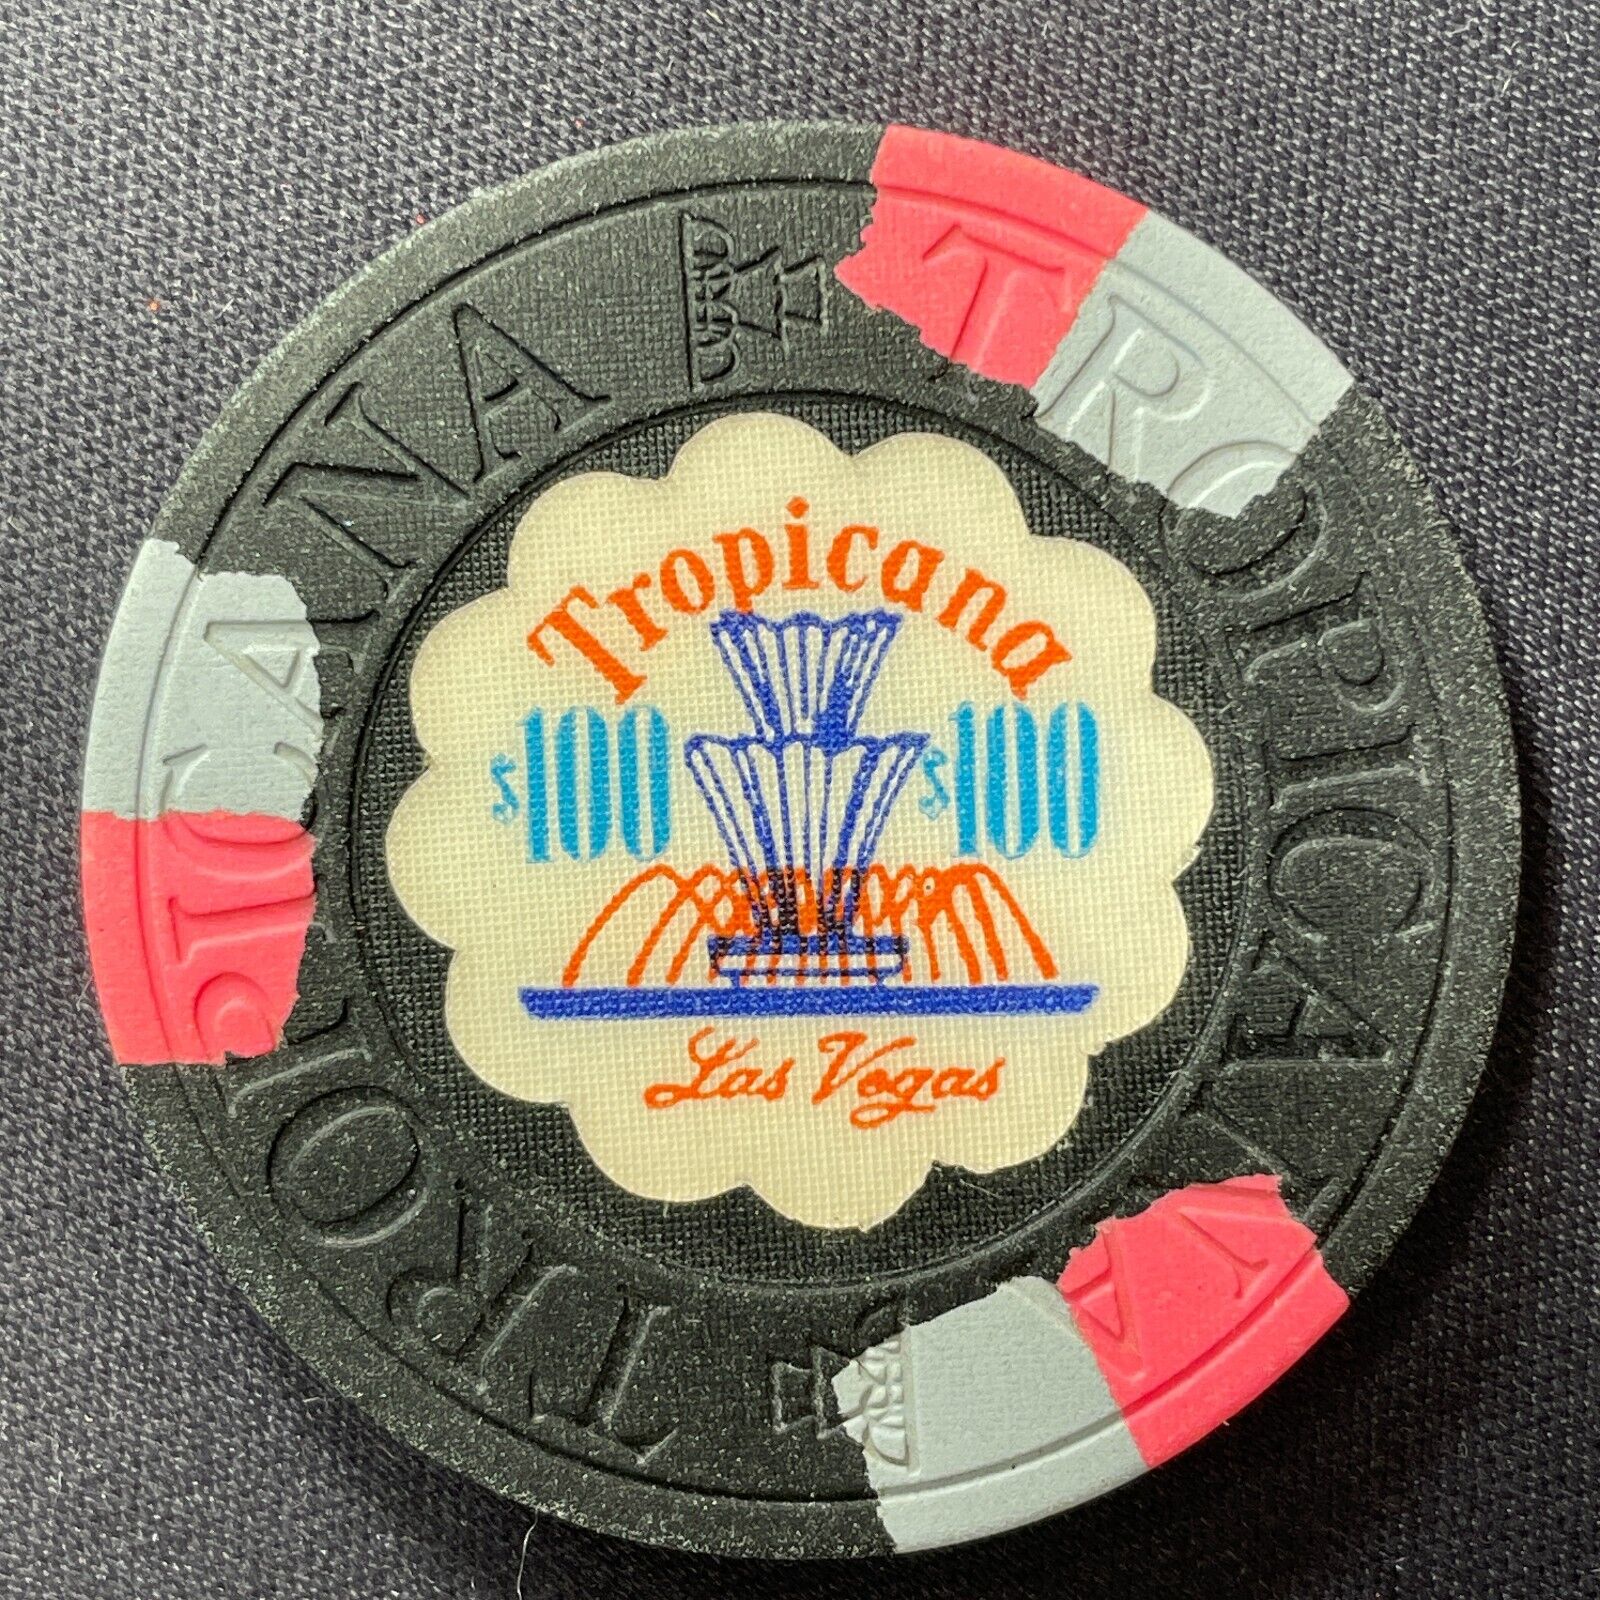 Tropicana Las Vegas $100 casino chip 1972 obsolete - closed 4-2-24 HL